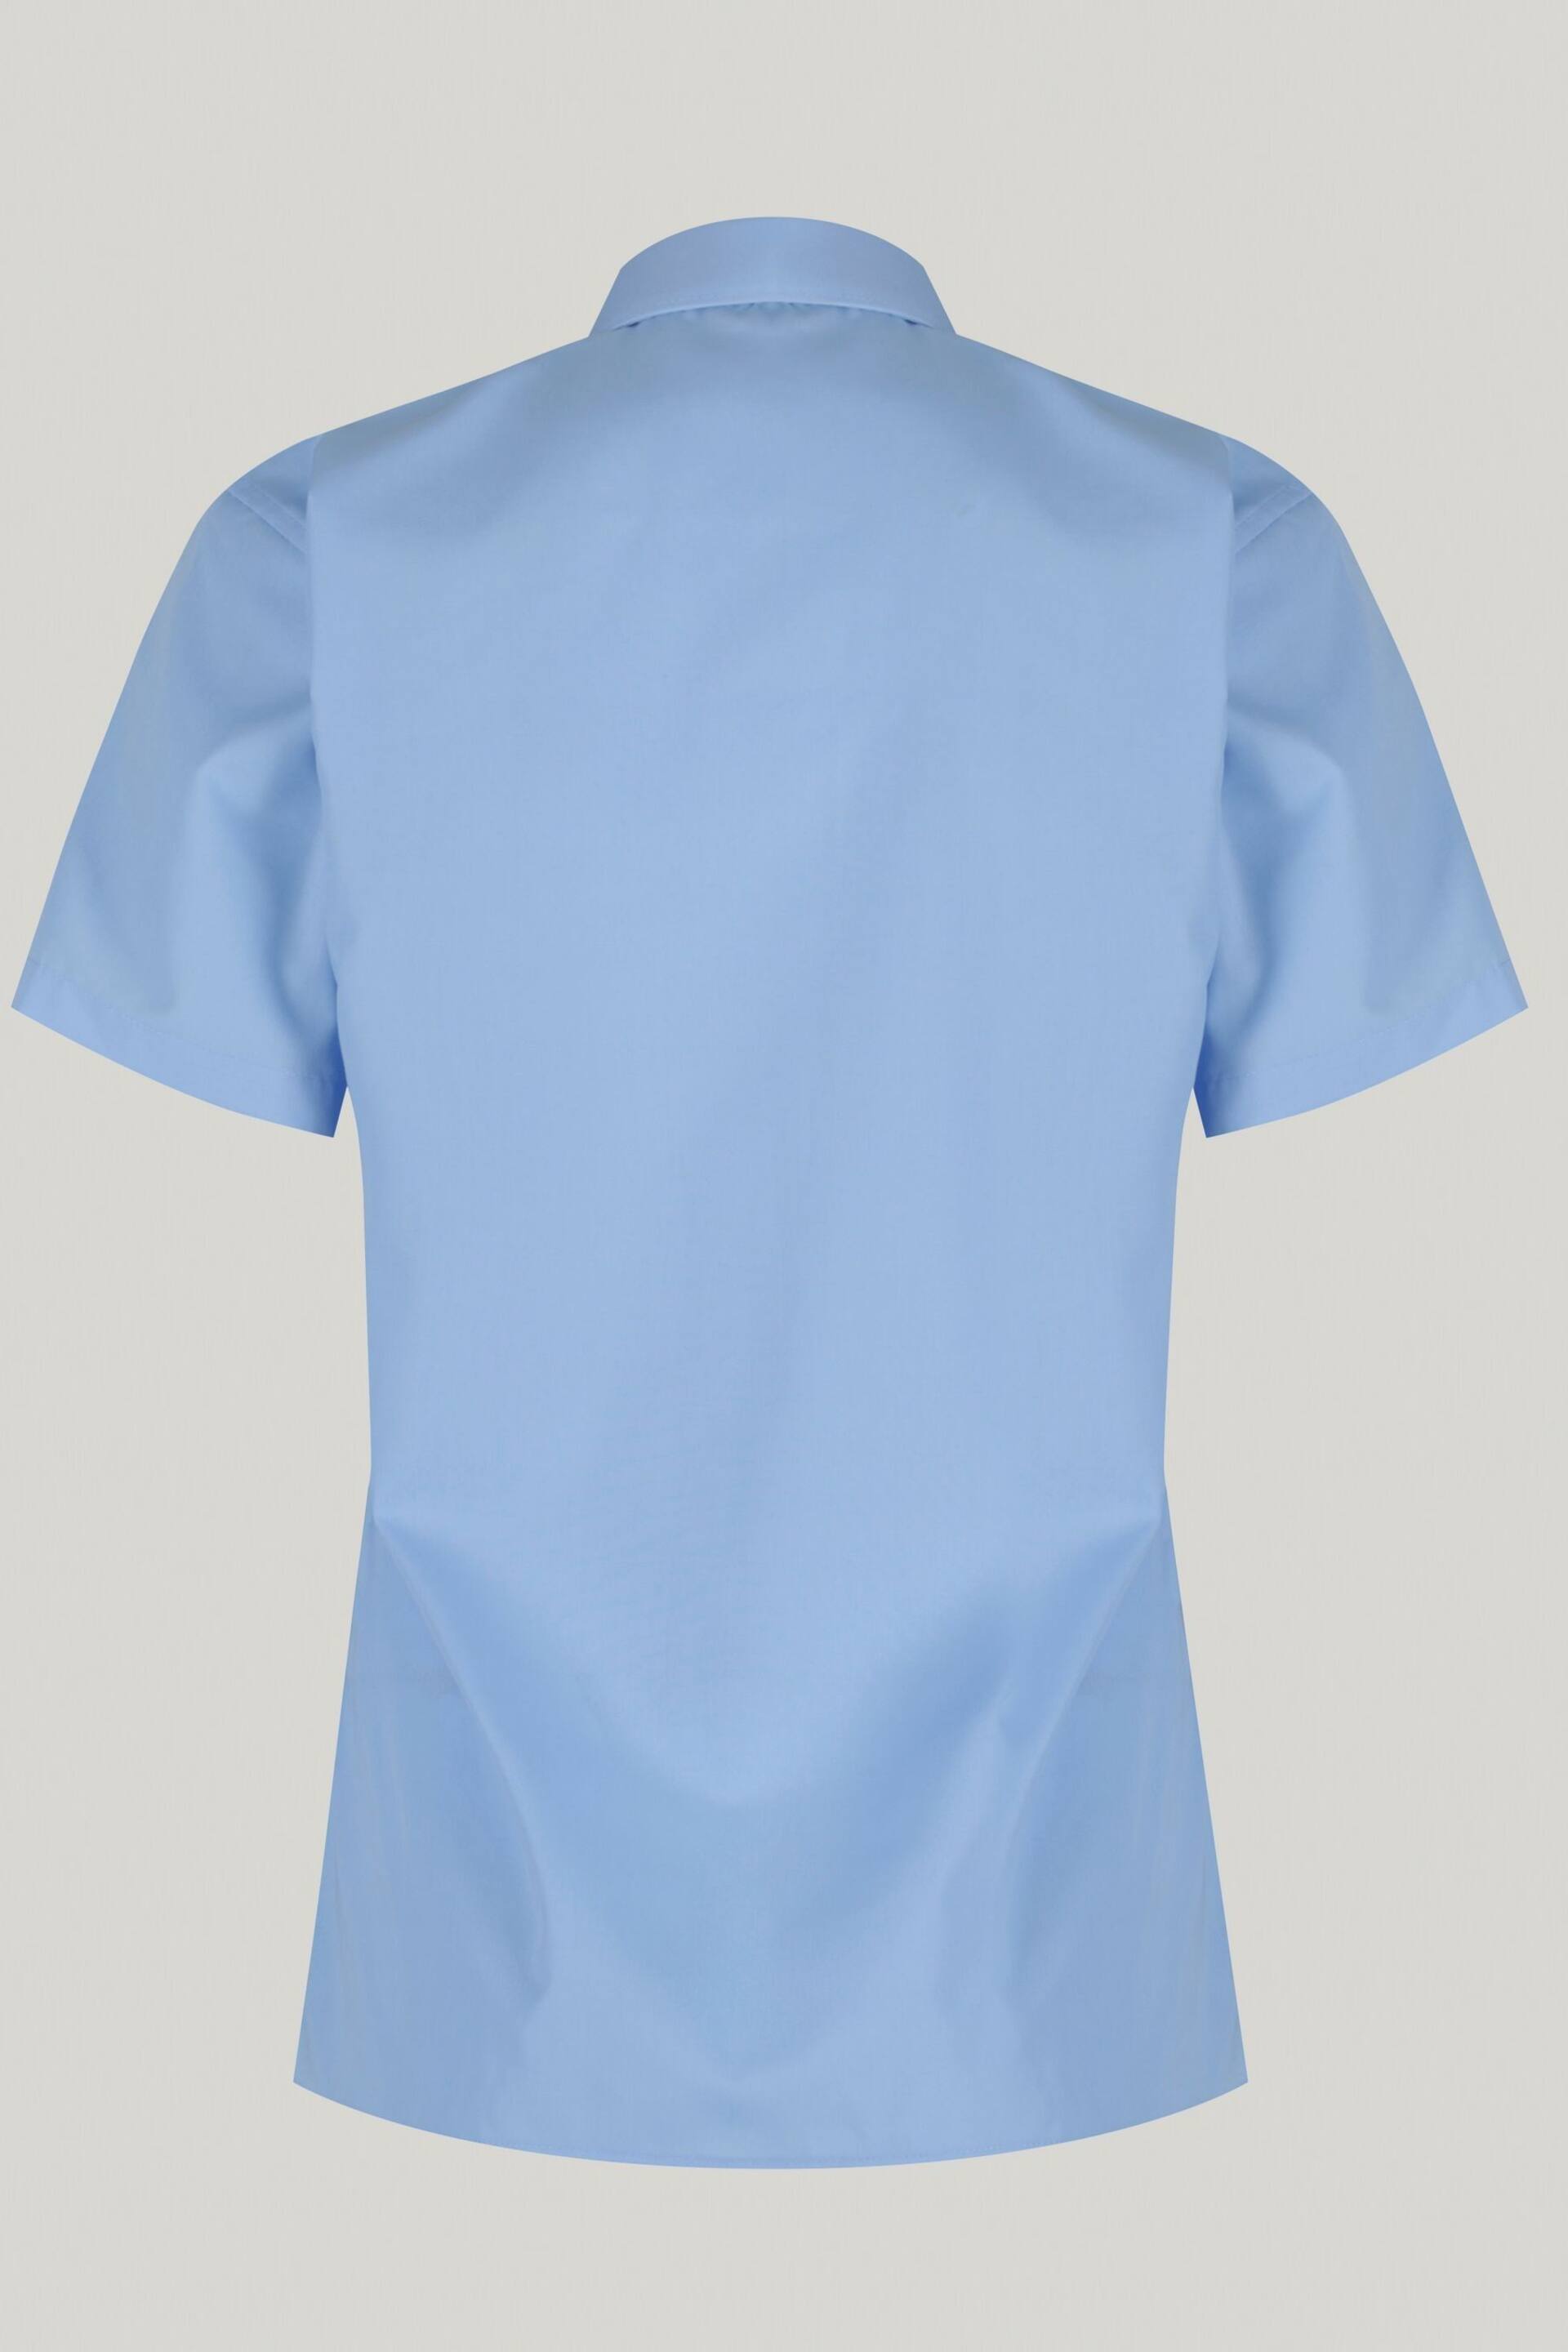 Trutex Blue Regular Fit Short Sleeve 2 Pack School Shirts - Image 6 of 6